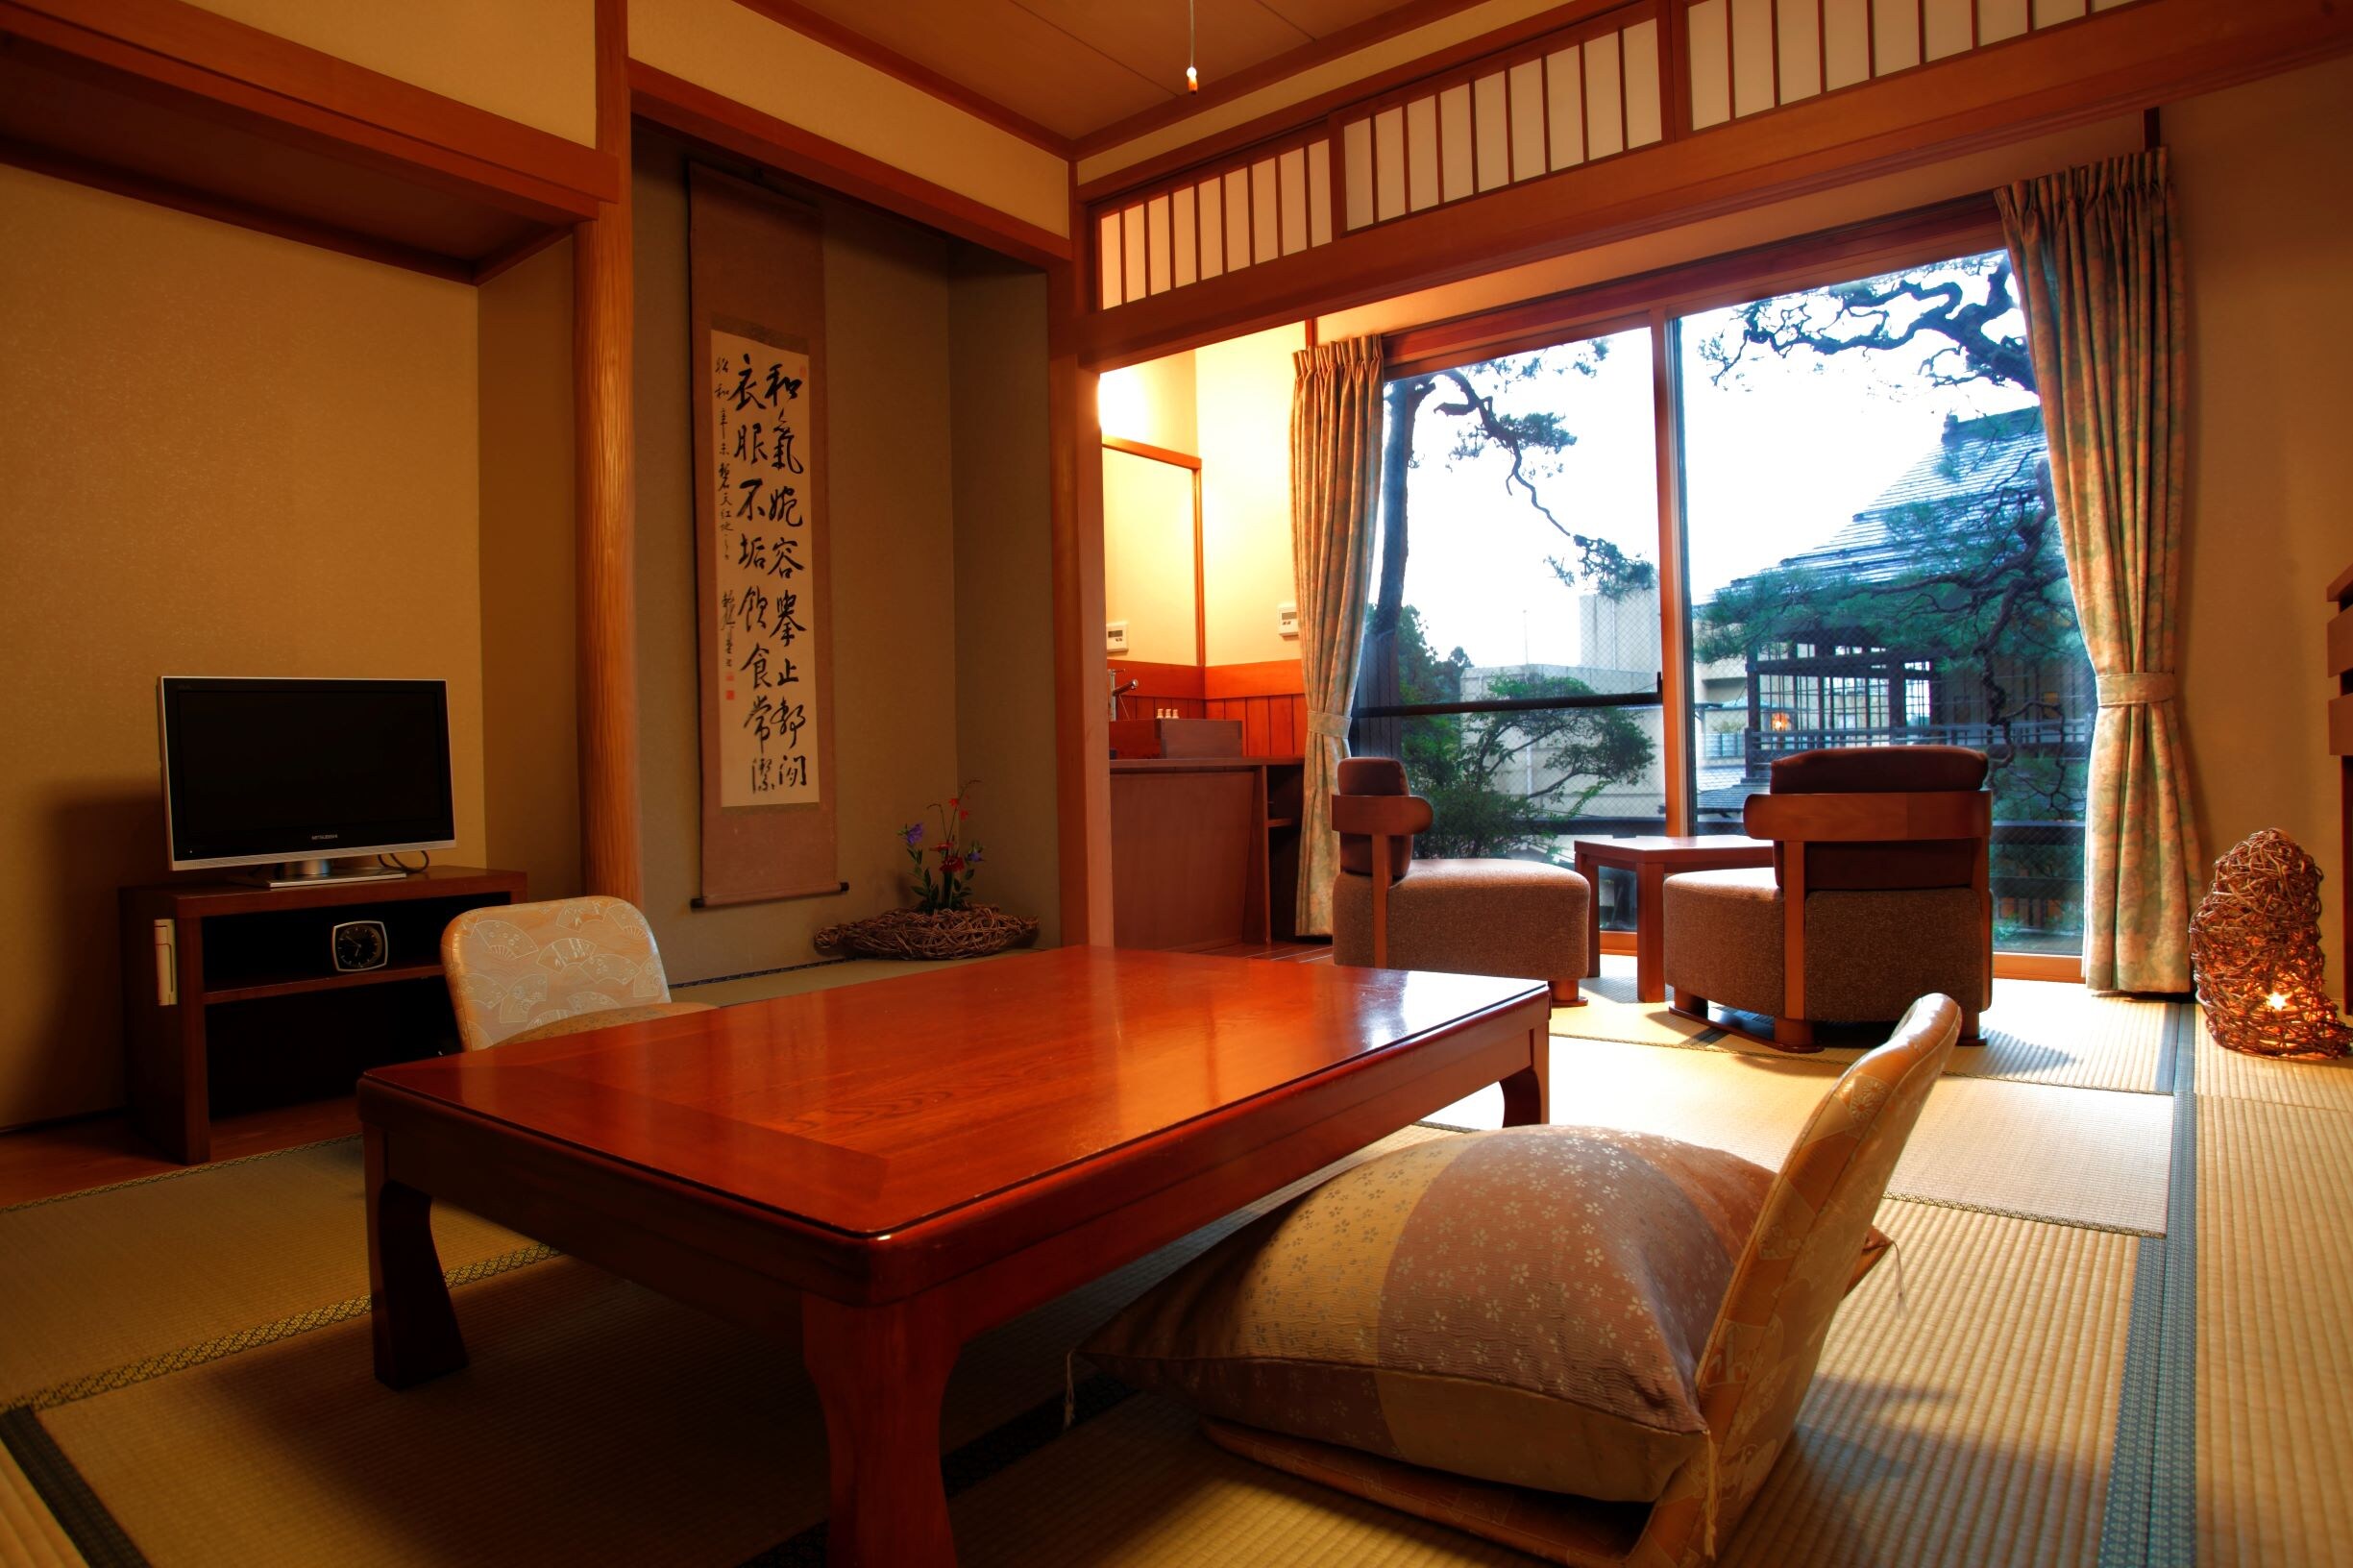 Kamar bergaya Jepang yang populer dengan banyak repeater, 10 tikar tatami